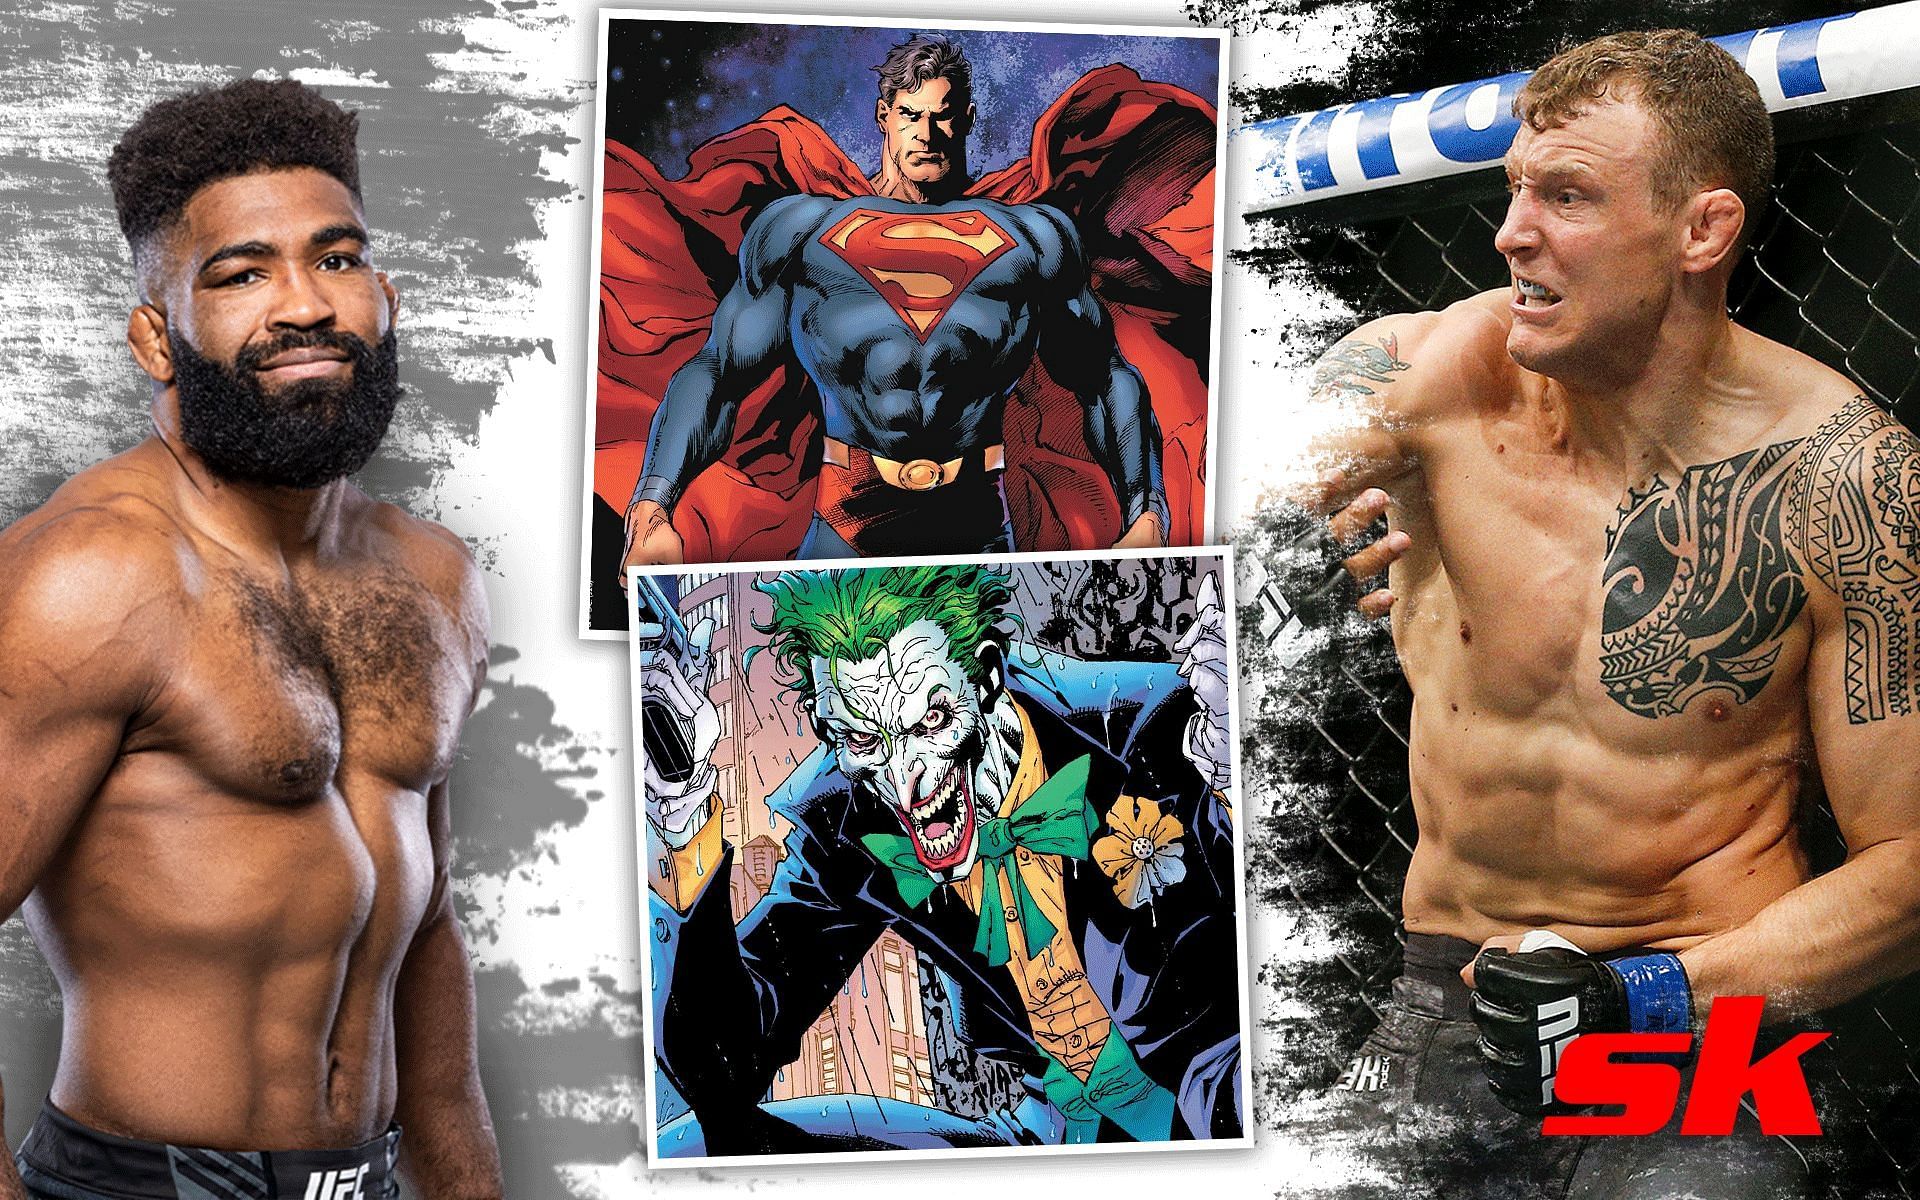 (Clockwise) Chris Curtis, Superman, Jack Hermansson, The Joker [Images via ufc.com, dccomics.com, and @superman on Instagram]